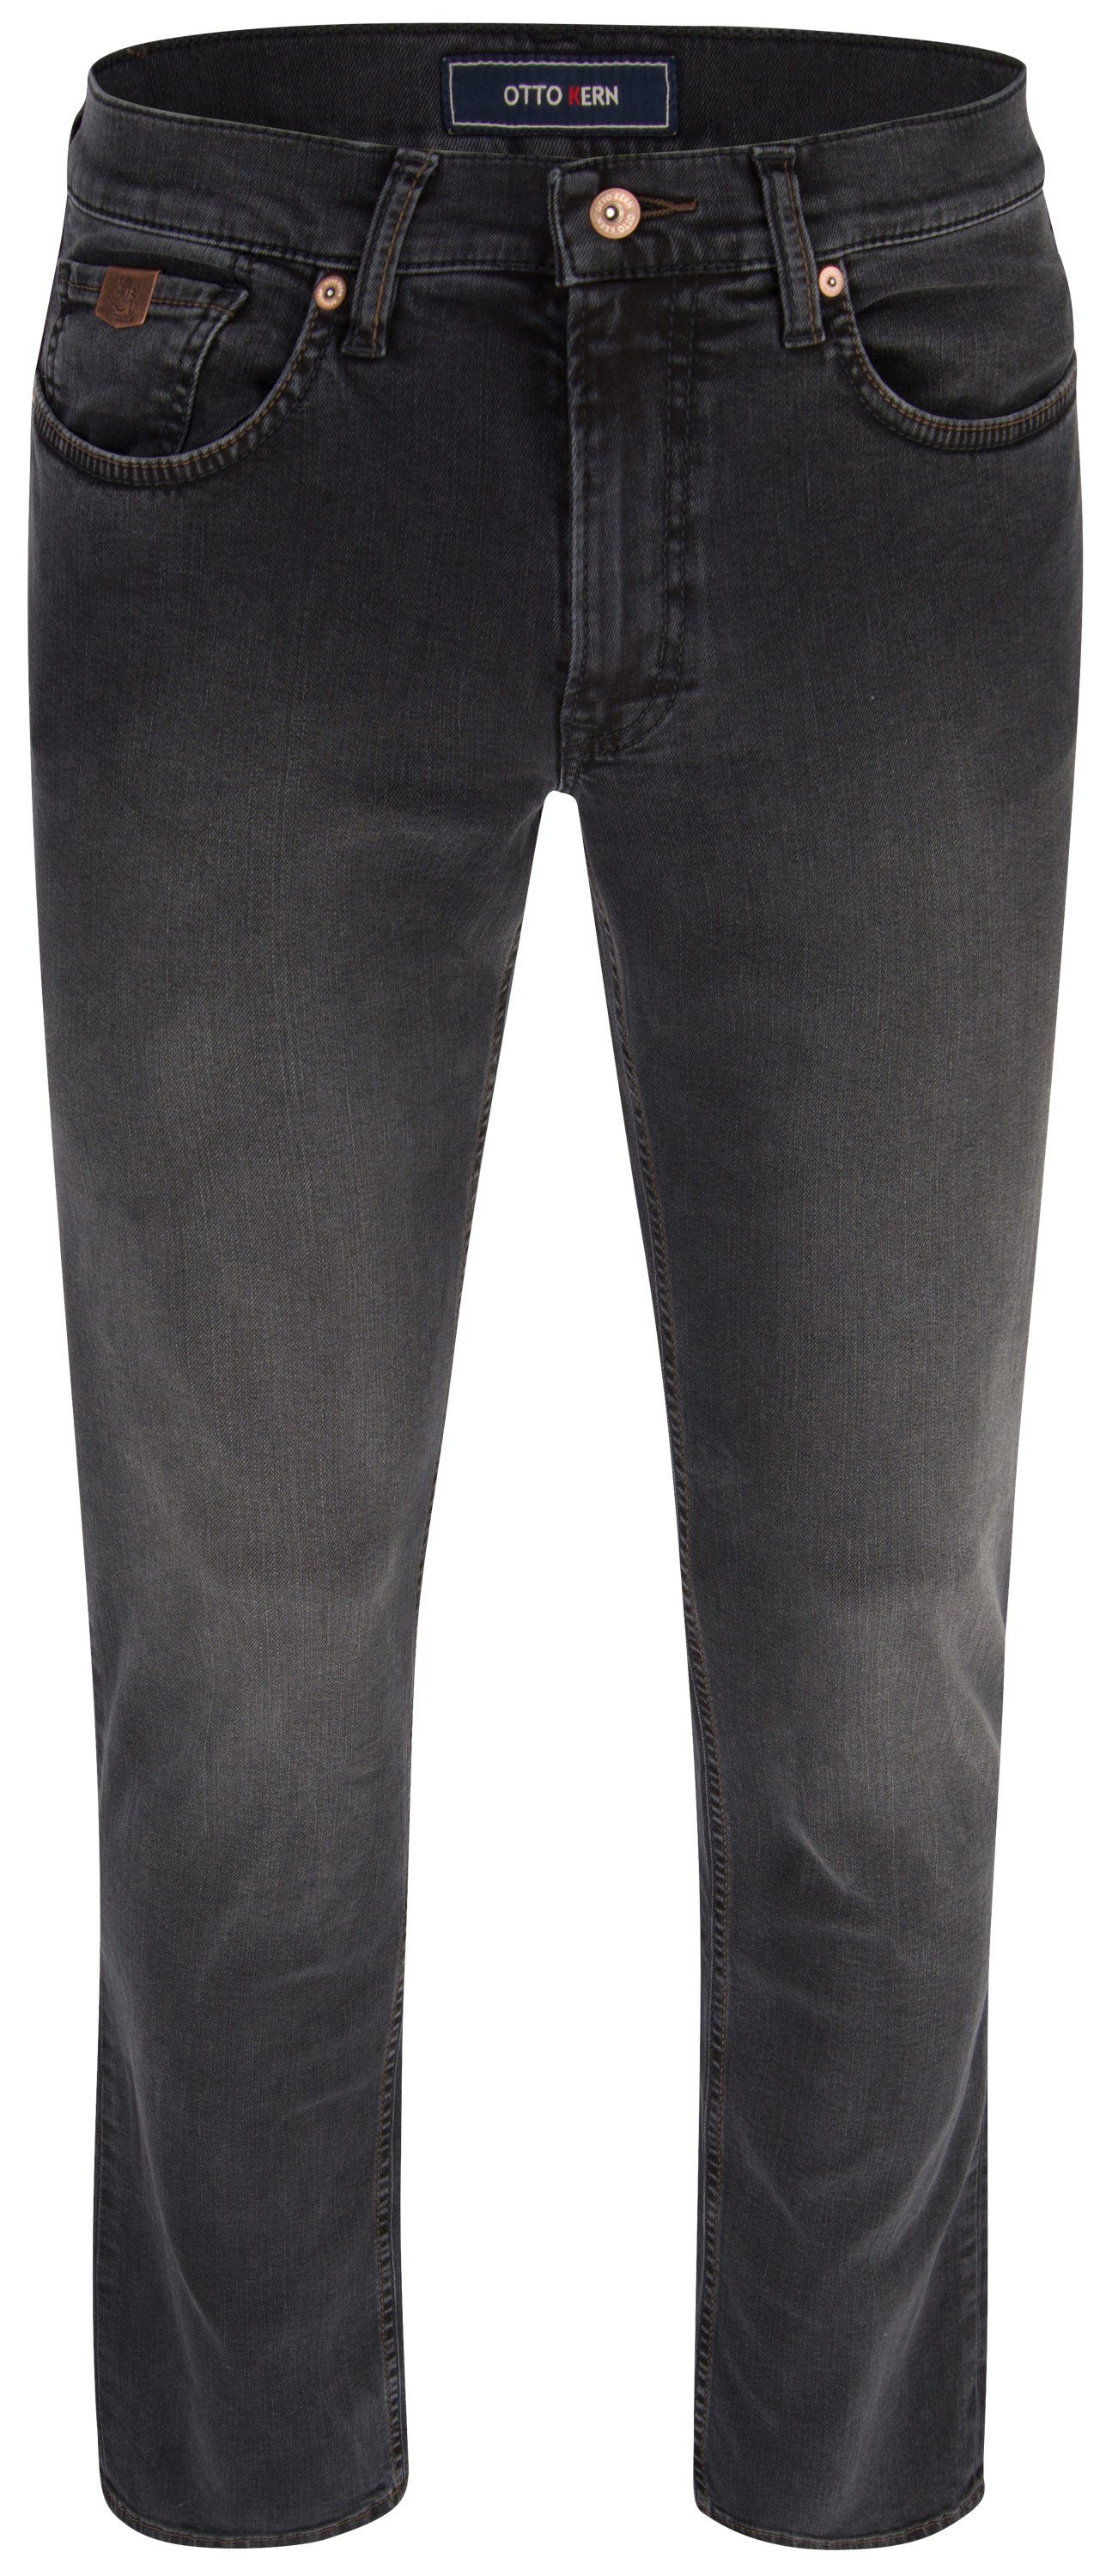  Kern 5-Pocket-Jeans OTTO KERN JOHN black grey used 67149 6962.9802 | Straight-Fit Jeans